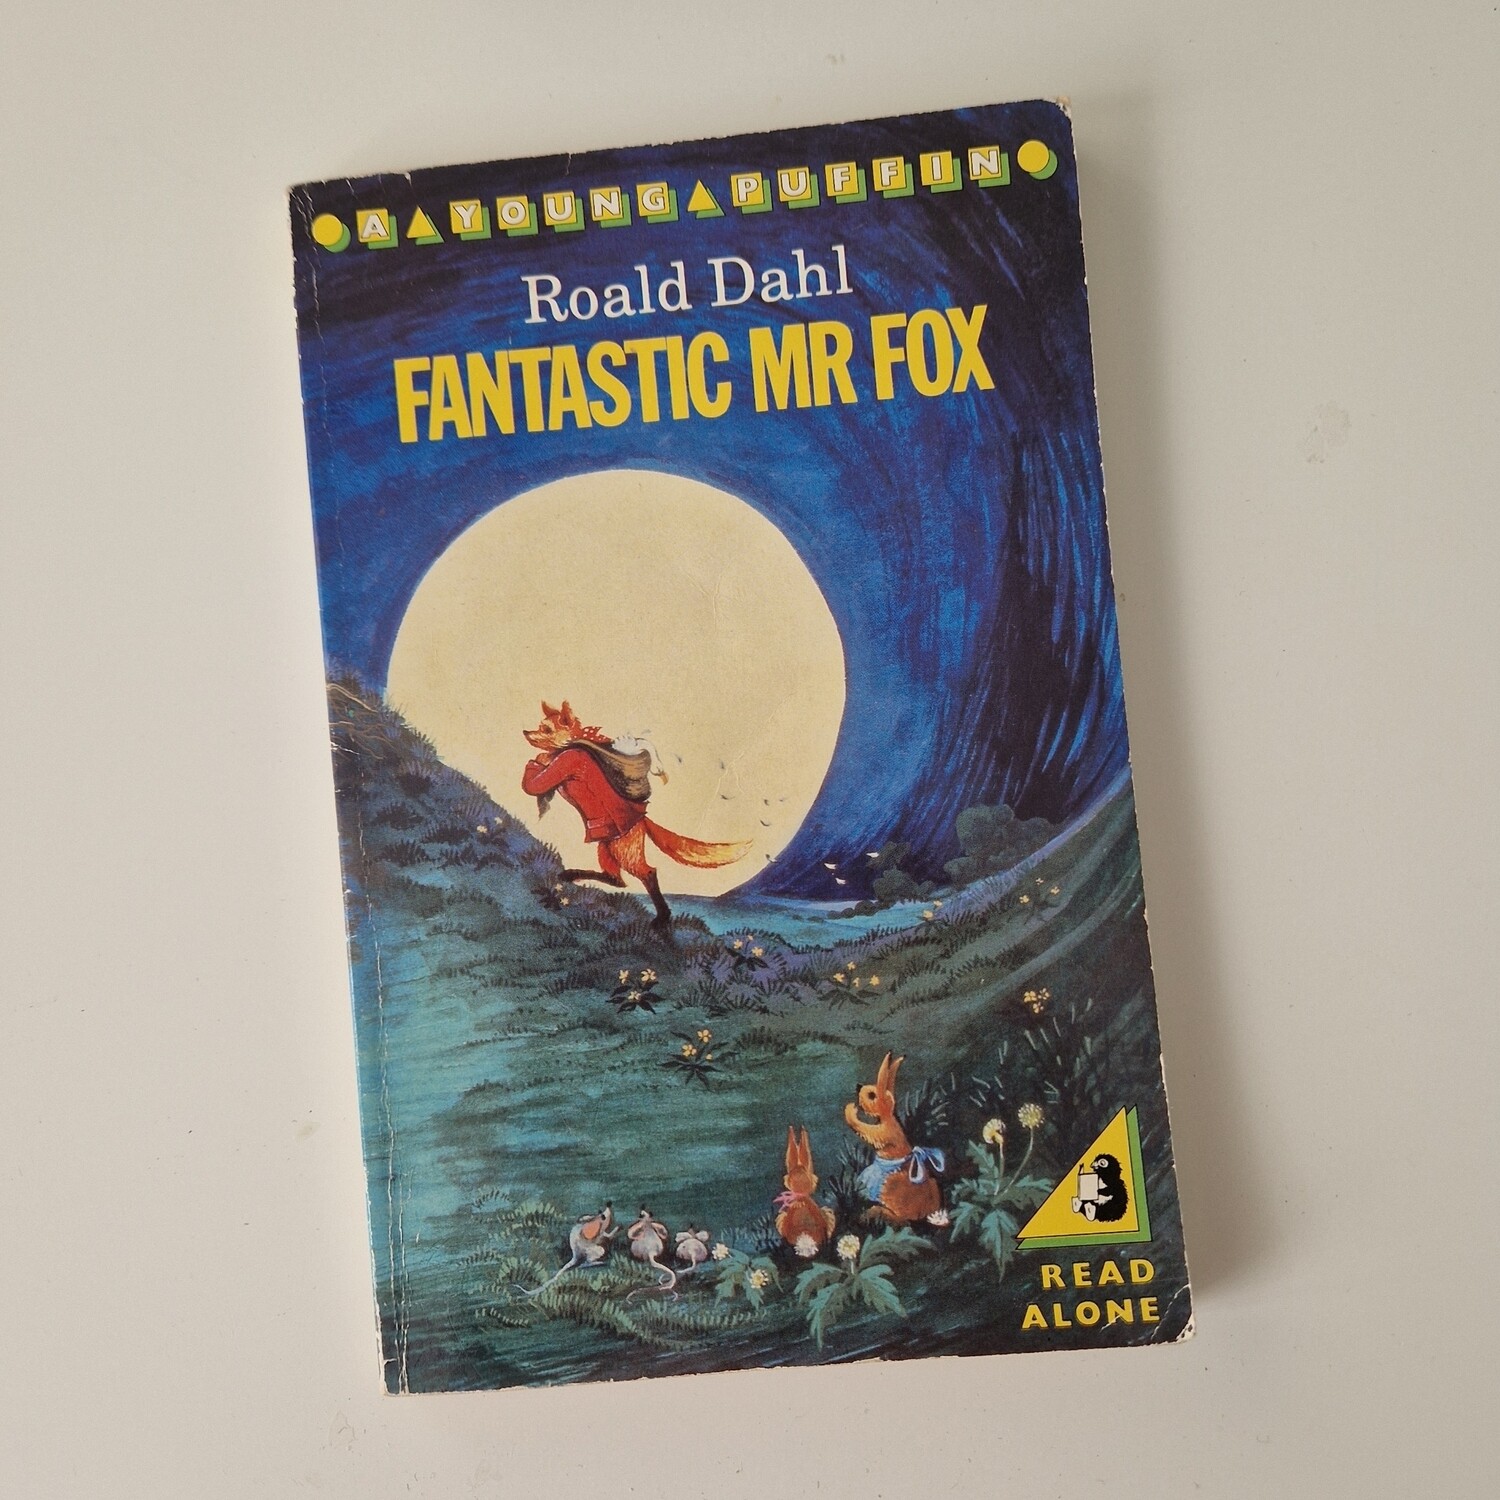 Fantastic Mr Fox Roald Dahl Notebook - made from a paperback book